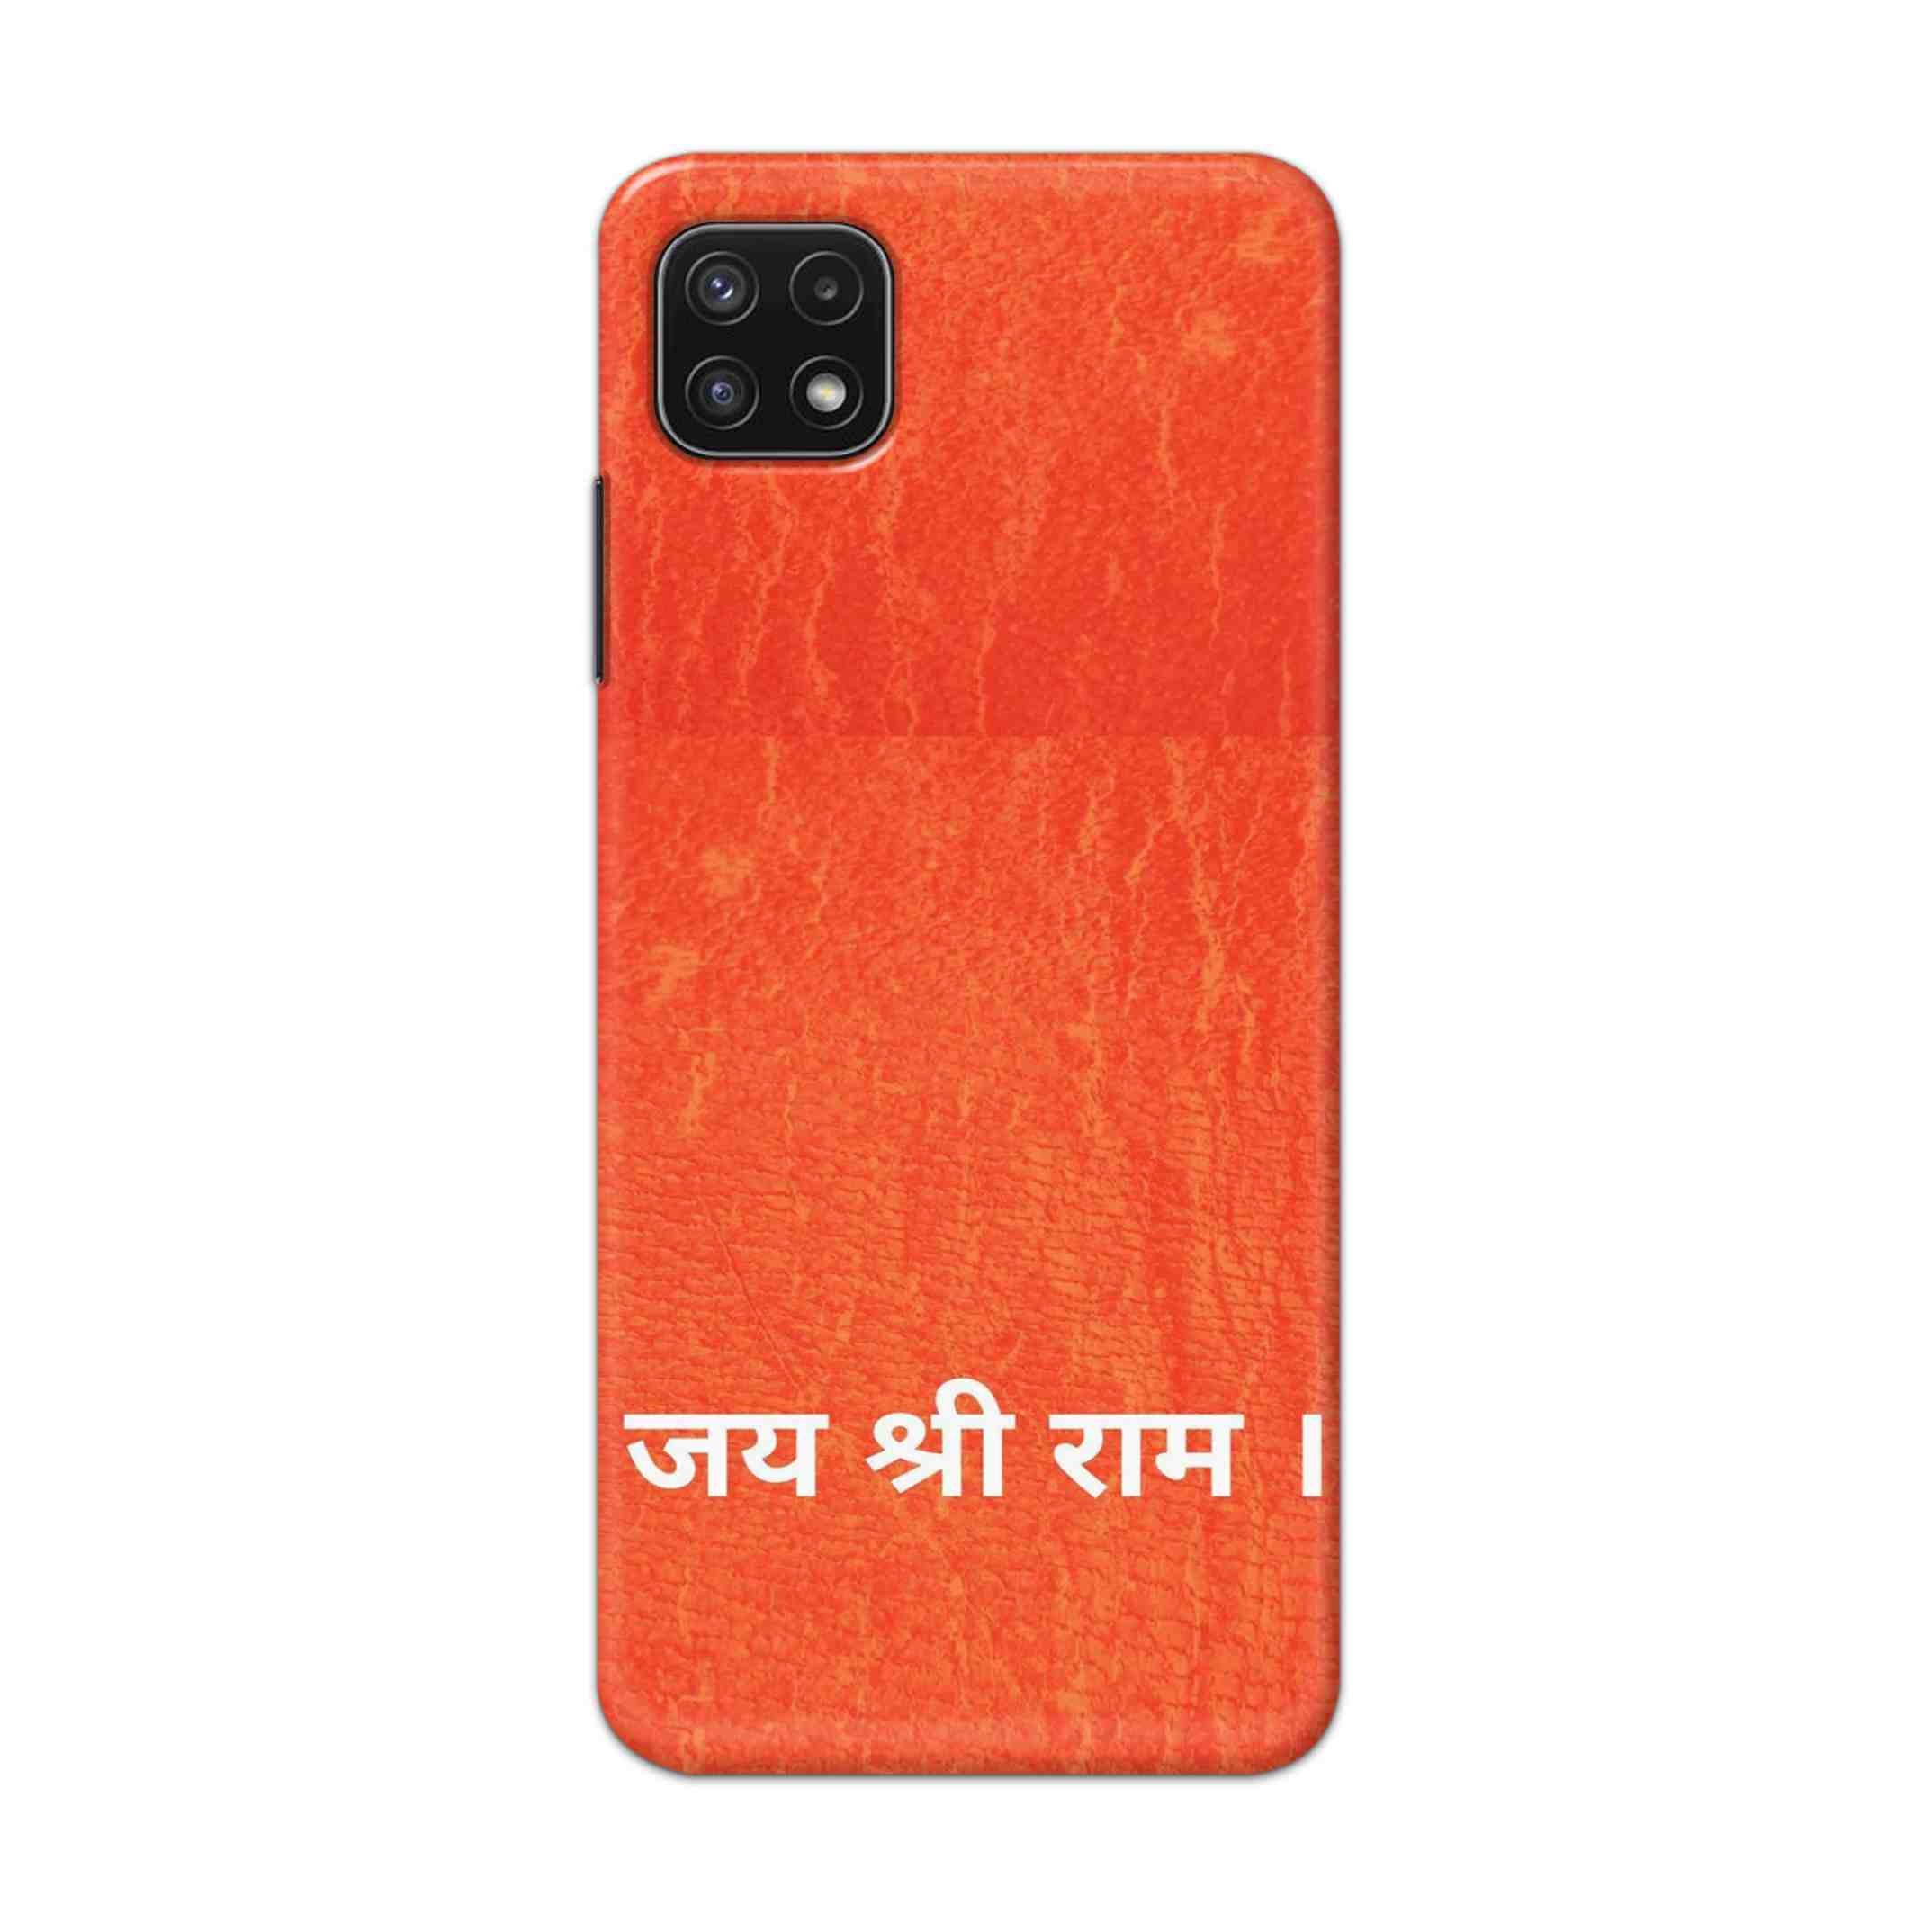 Buy Jai Shree Ram Hard Back Mobile Phone Case Cover For Samsung A22 5G Online